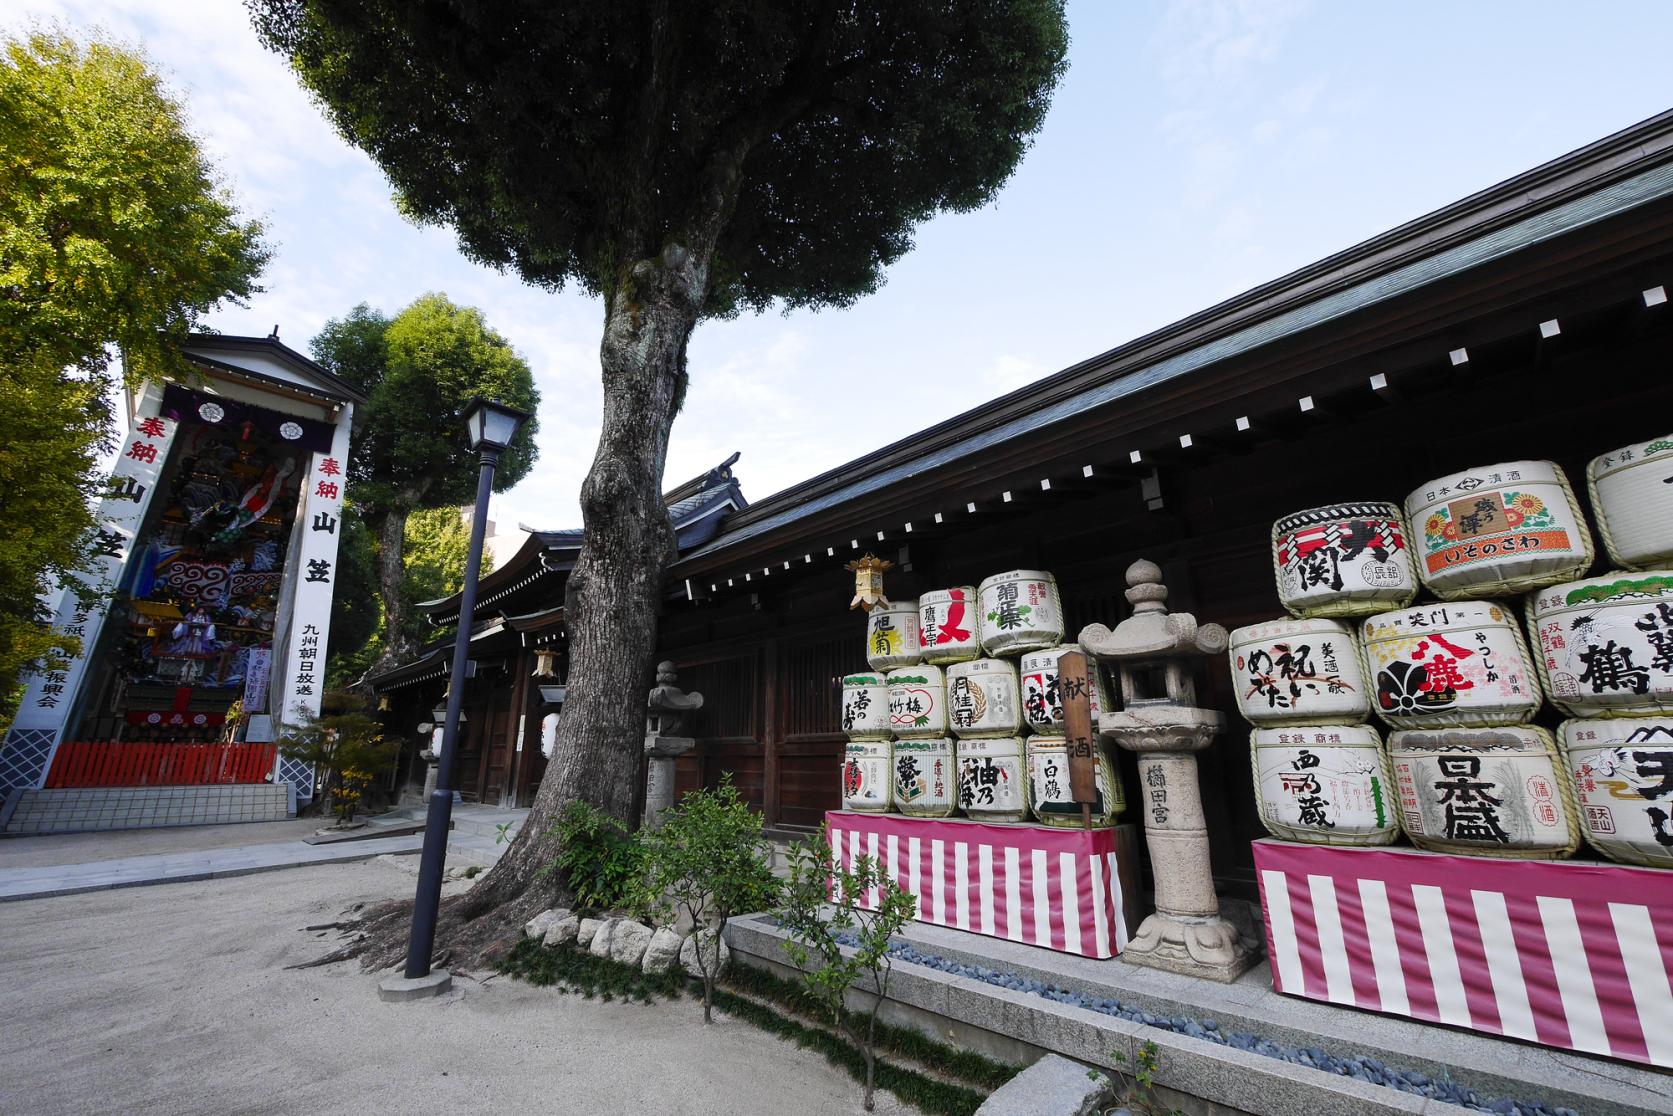 Fukuoka, home to famous sake-0